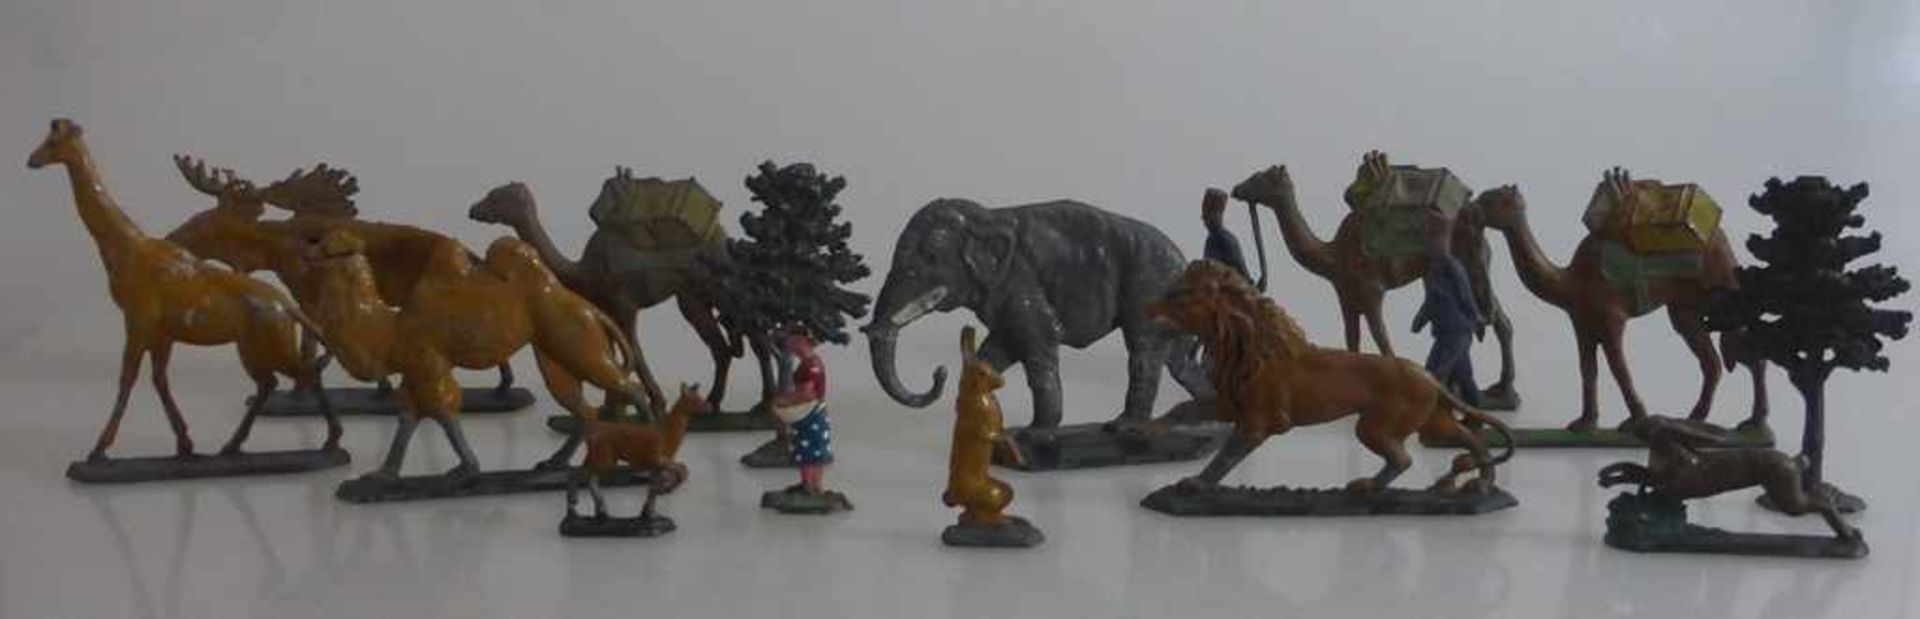 Bleifiguren um 1920, meist Tierdarstellungen wie Kamele, Elefant, Elch, Löwe u.a., insg.27 Figuren /